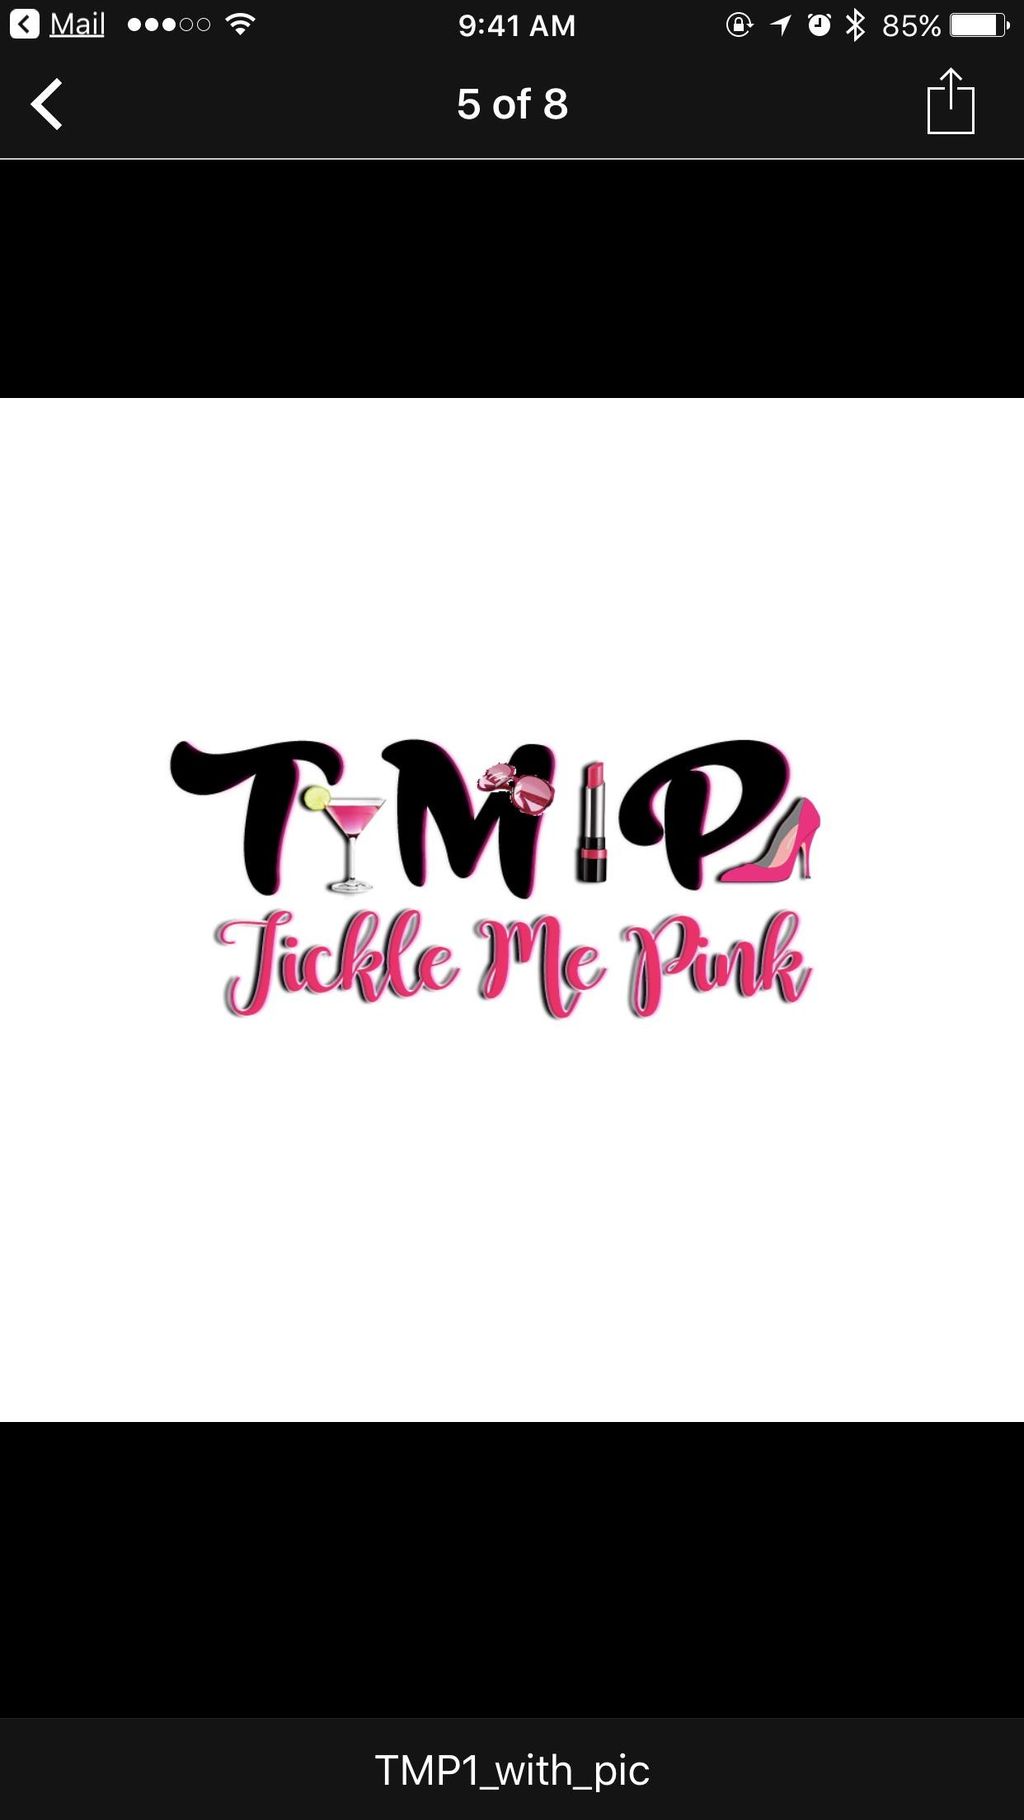 Tickle Me Pink LLC